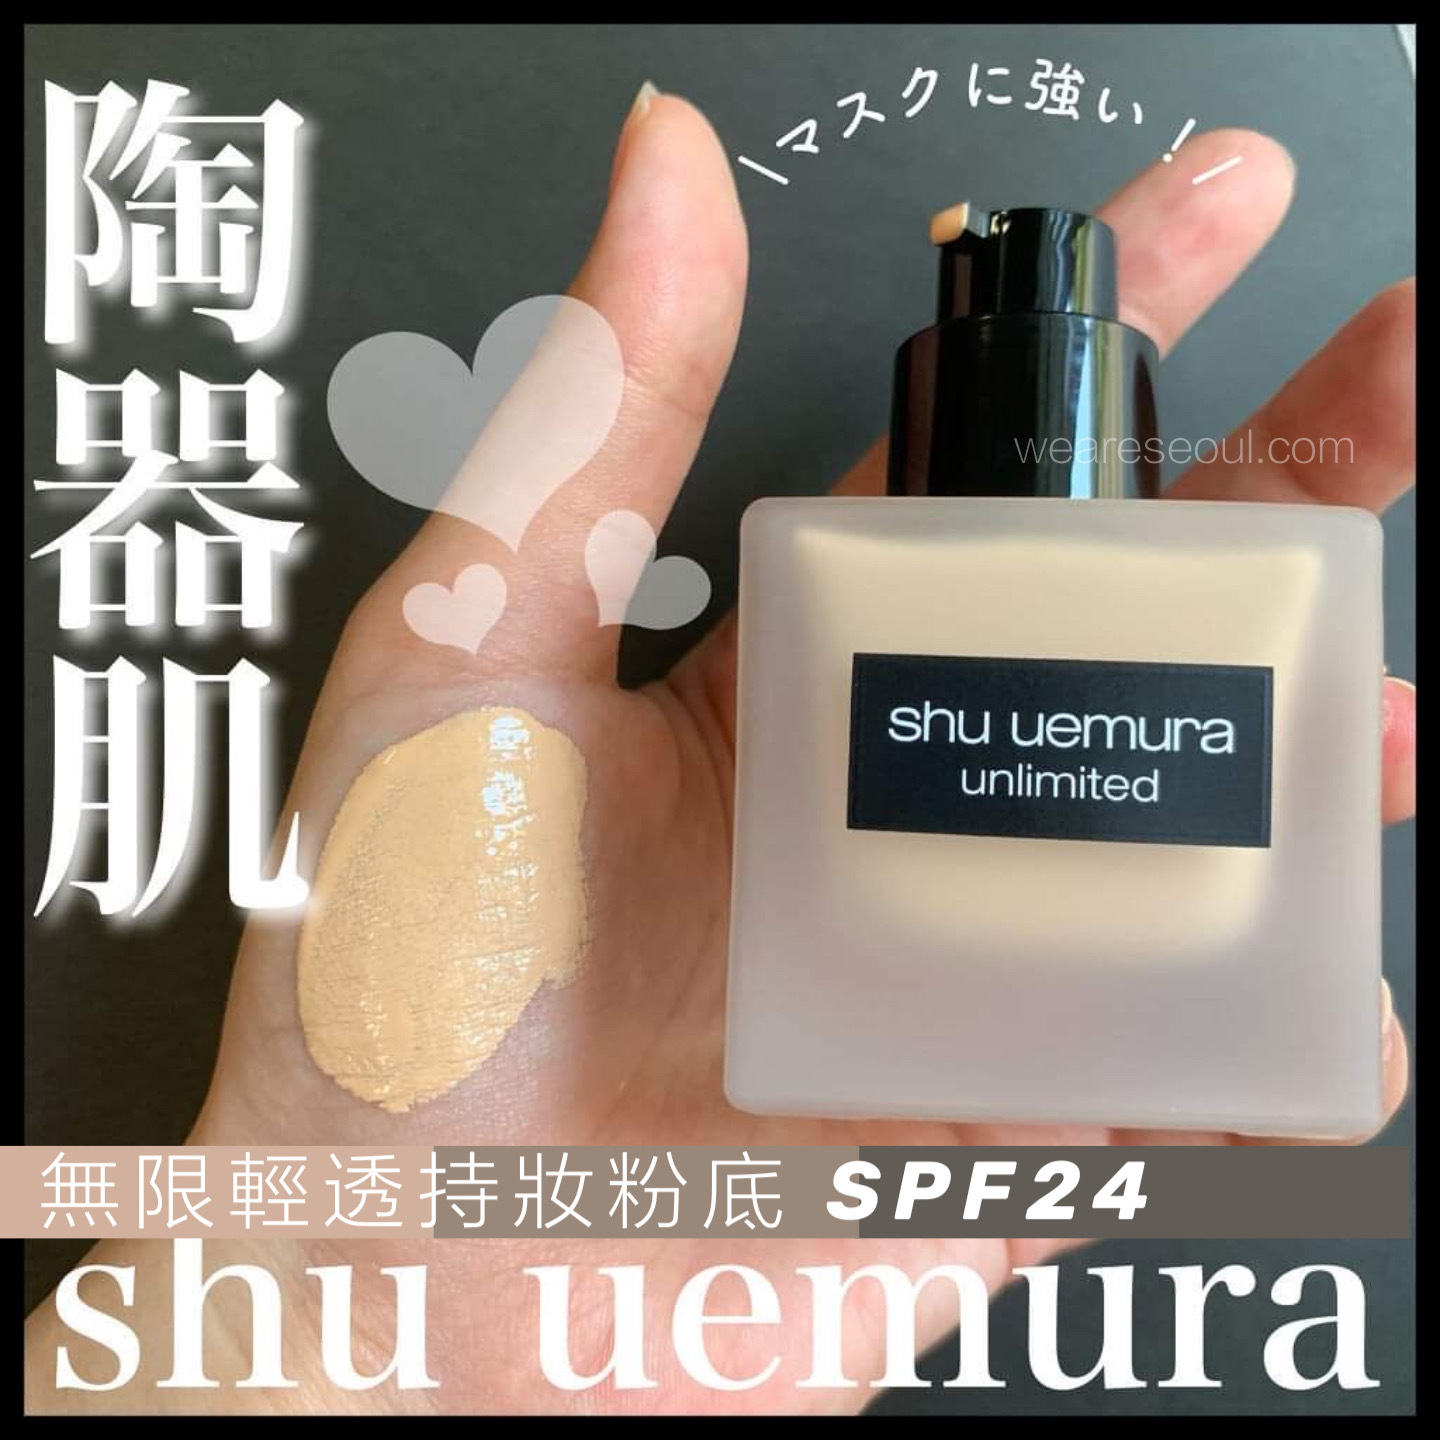 Shu uemura 無限輕透持妝粉底液weareseoul.com